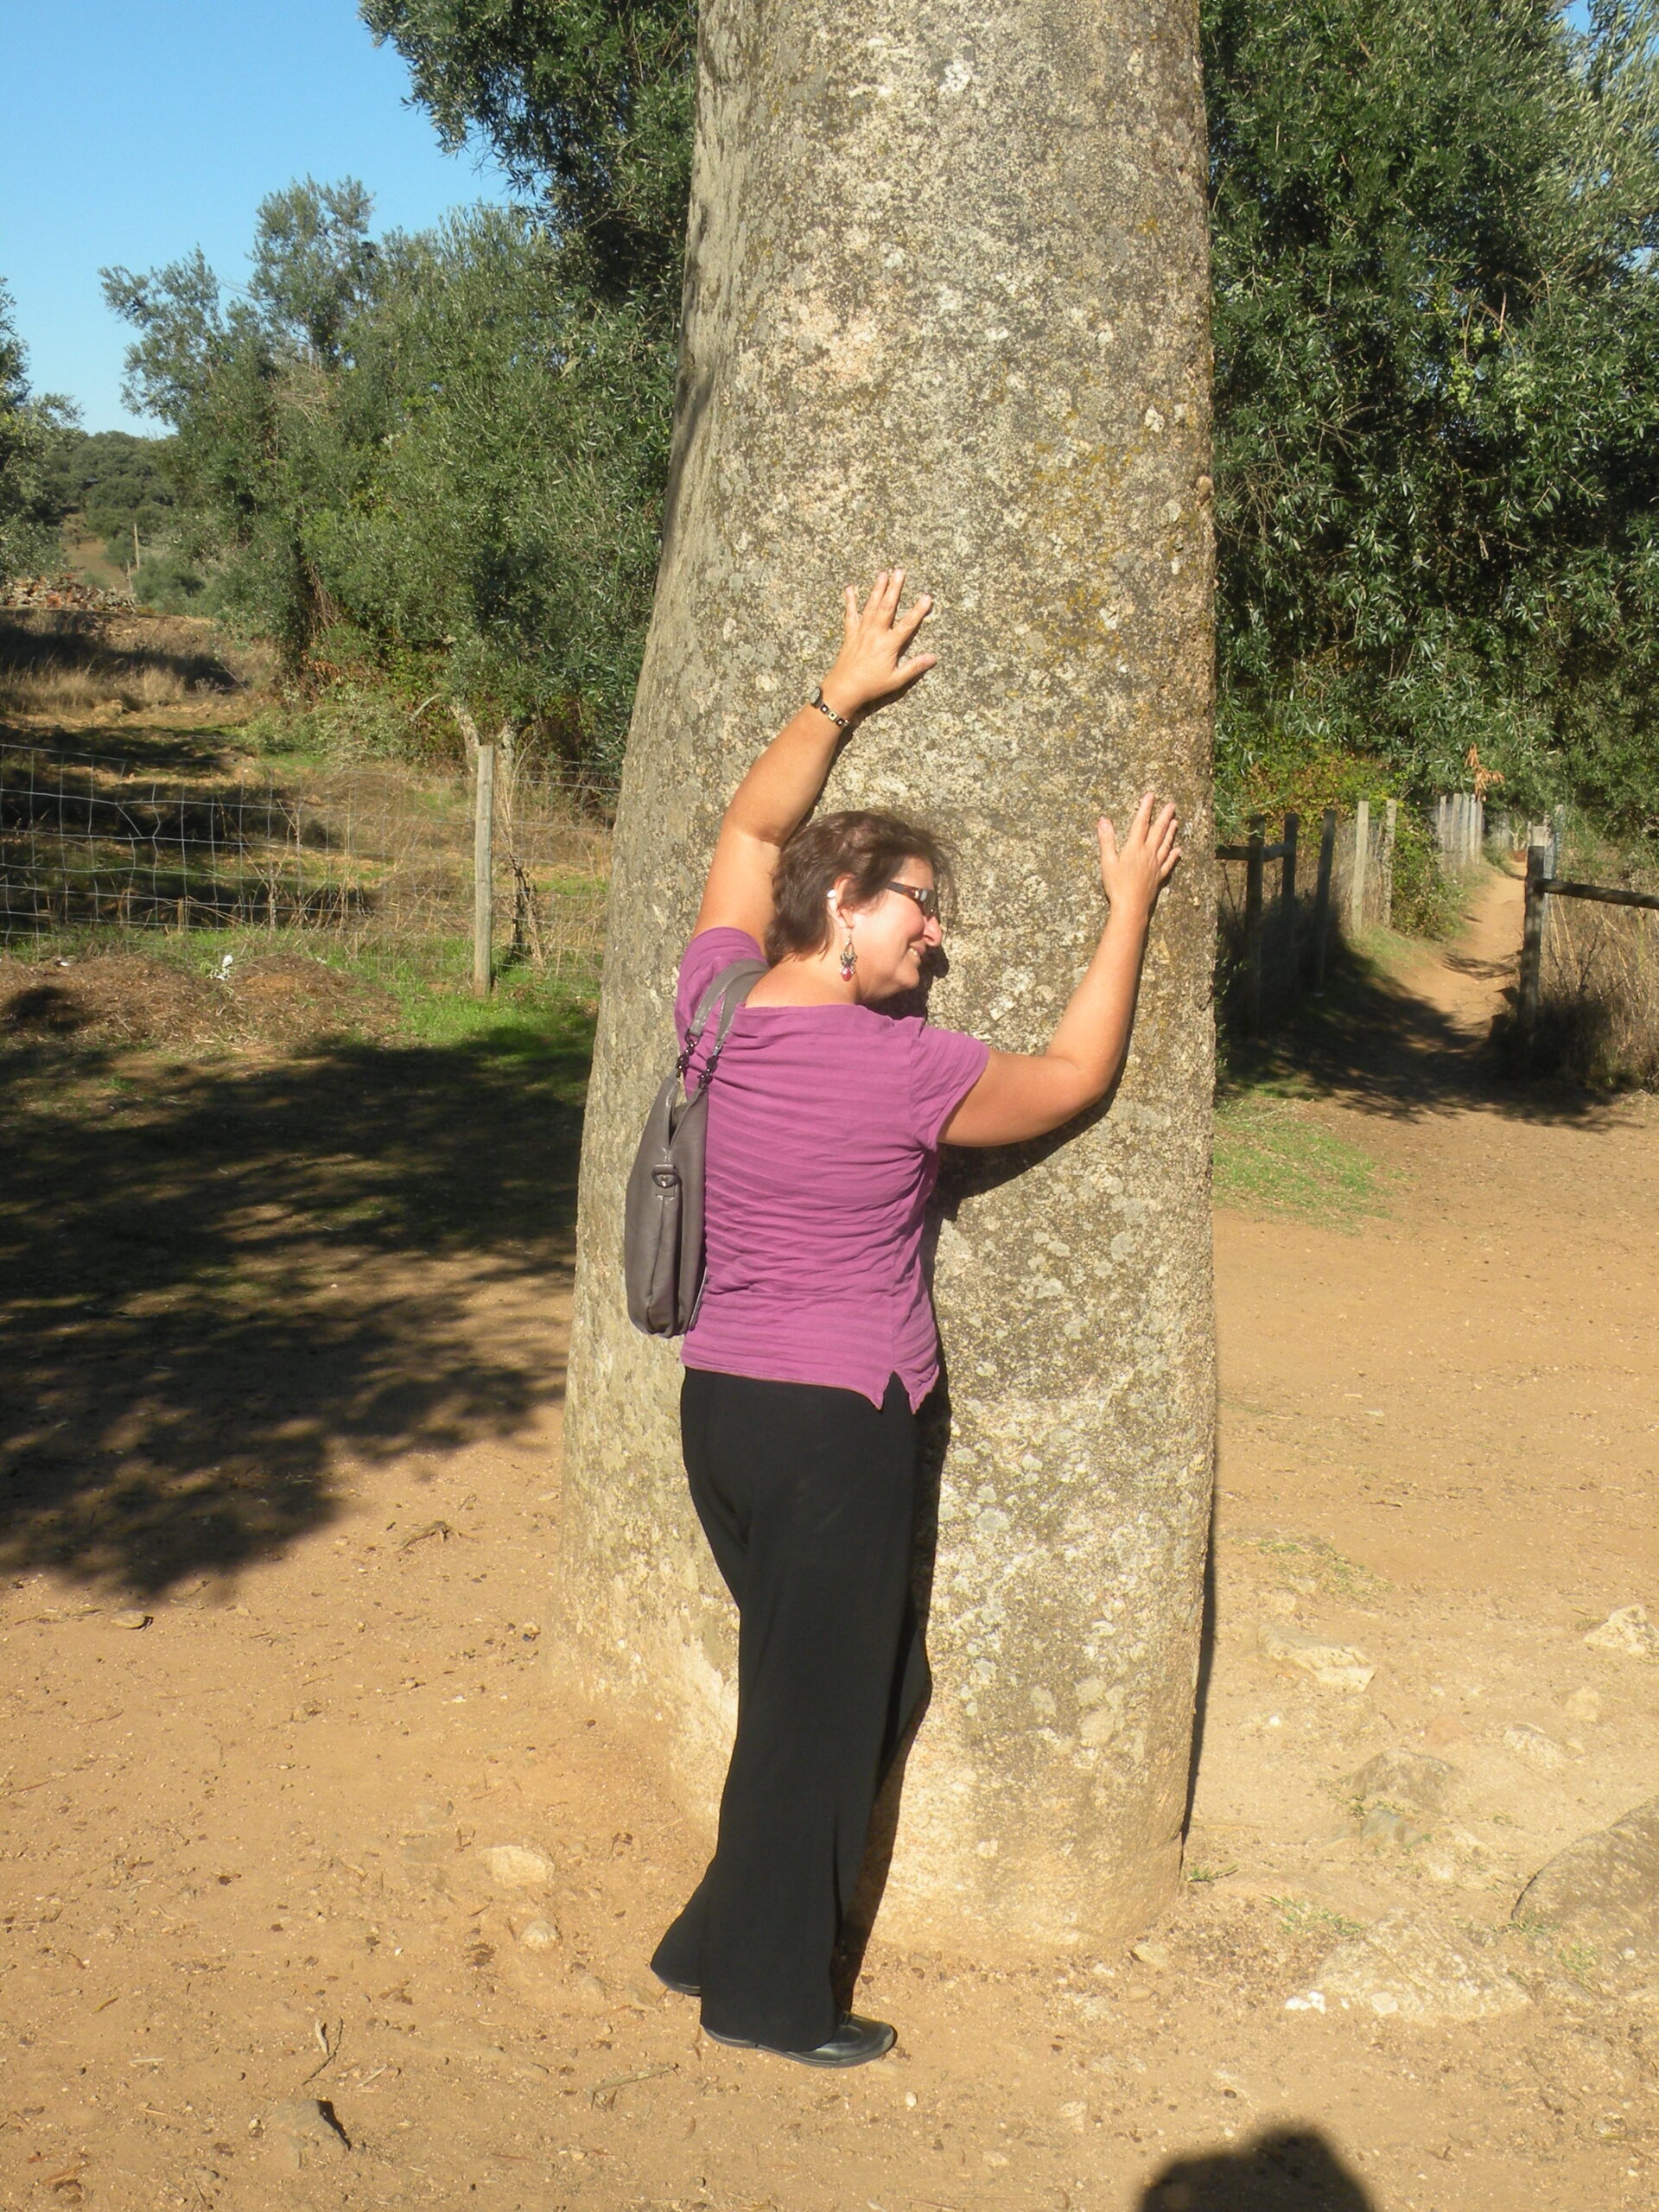 Carol at the Alemndres Menhir near Evora in Portugal